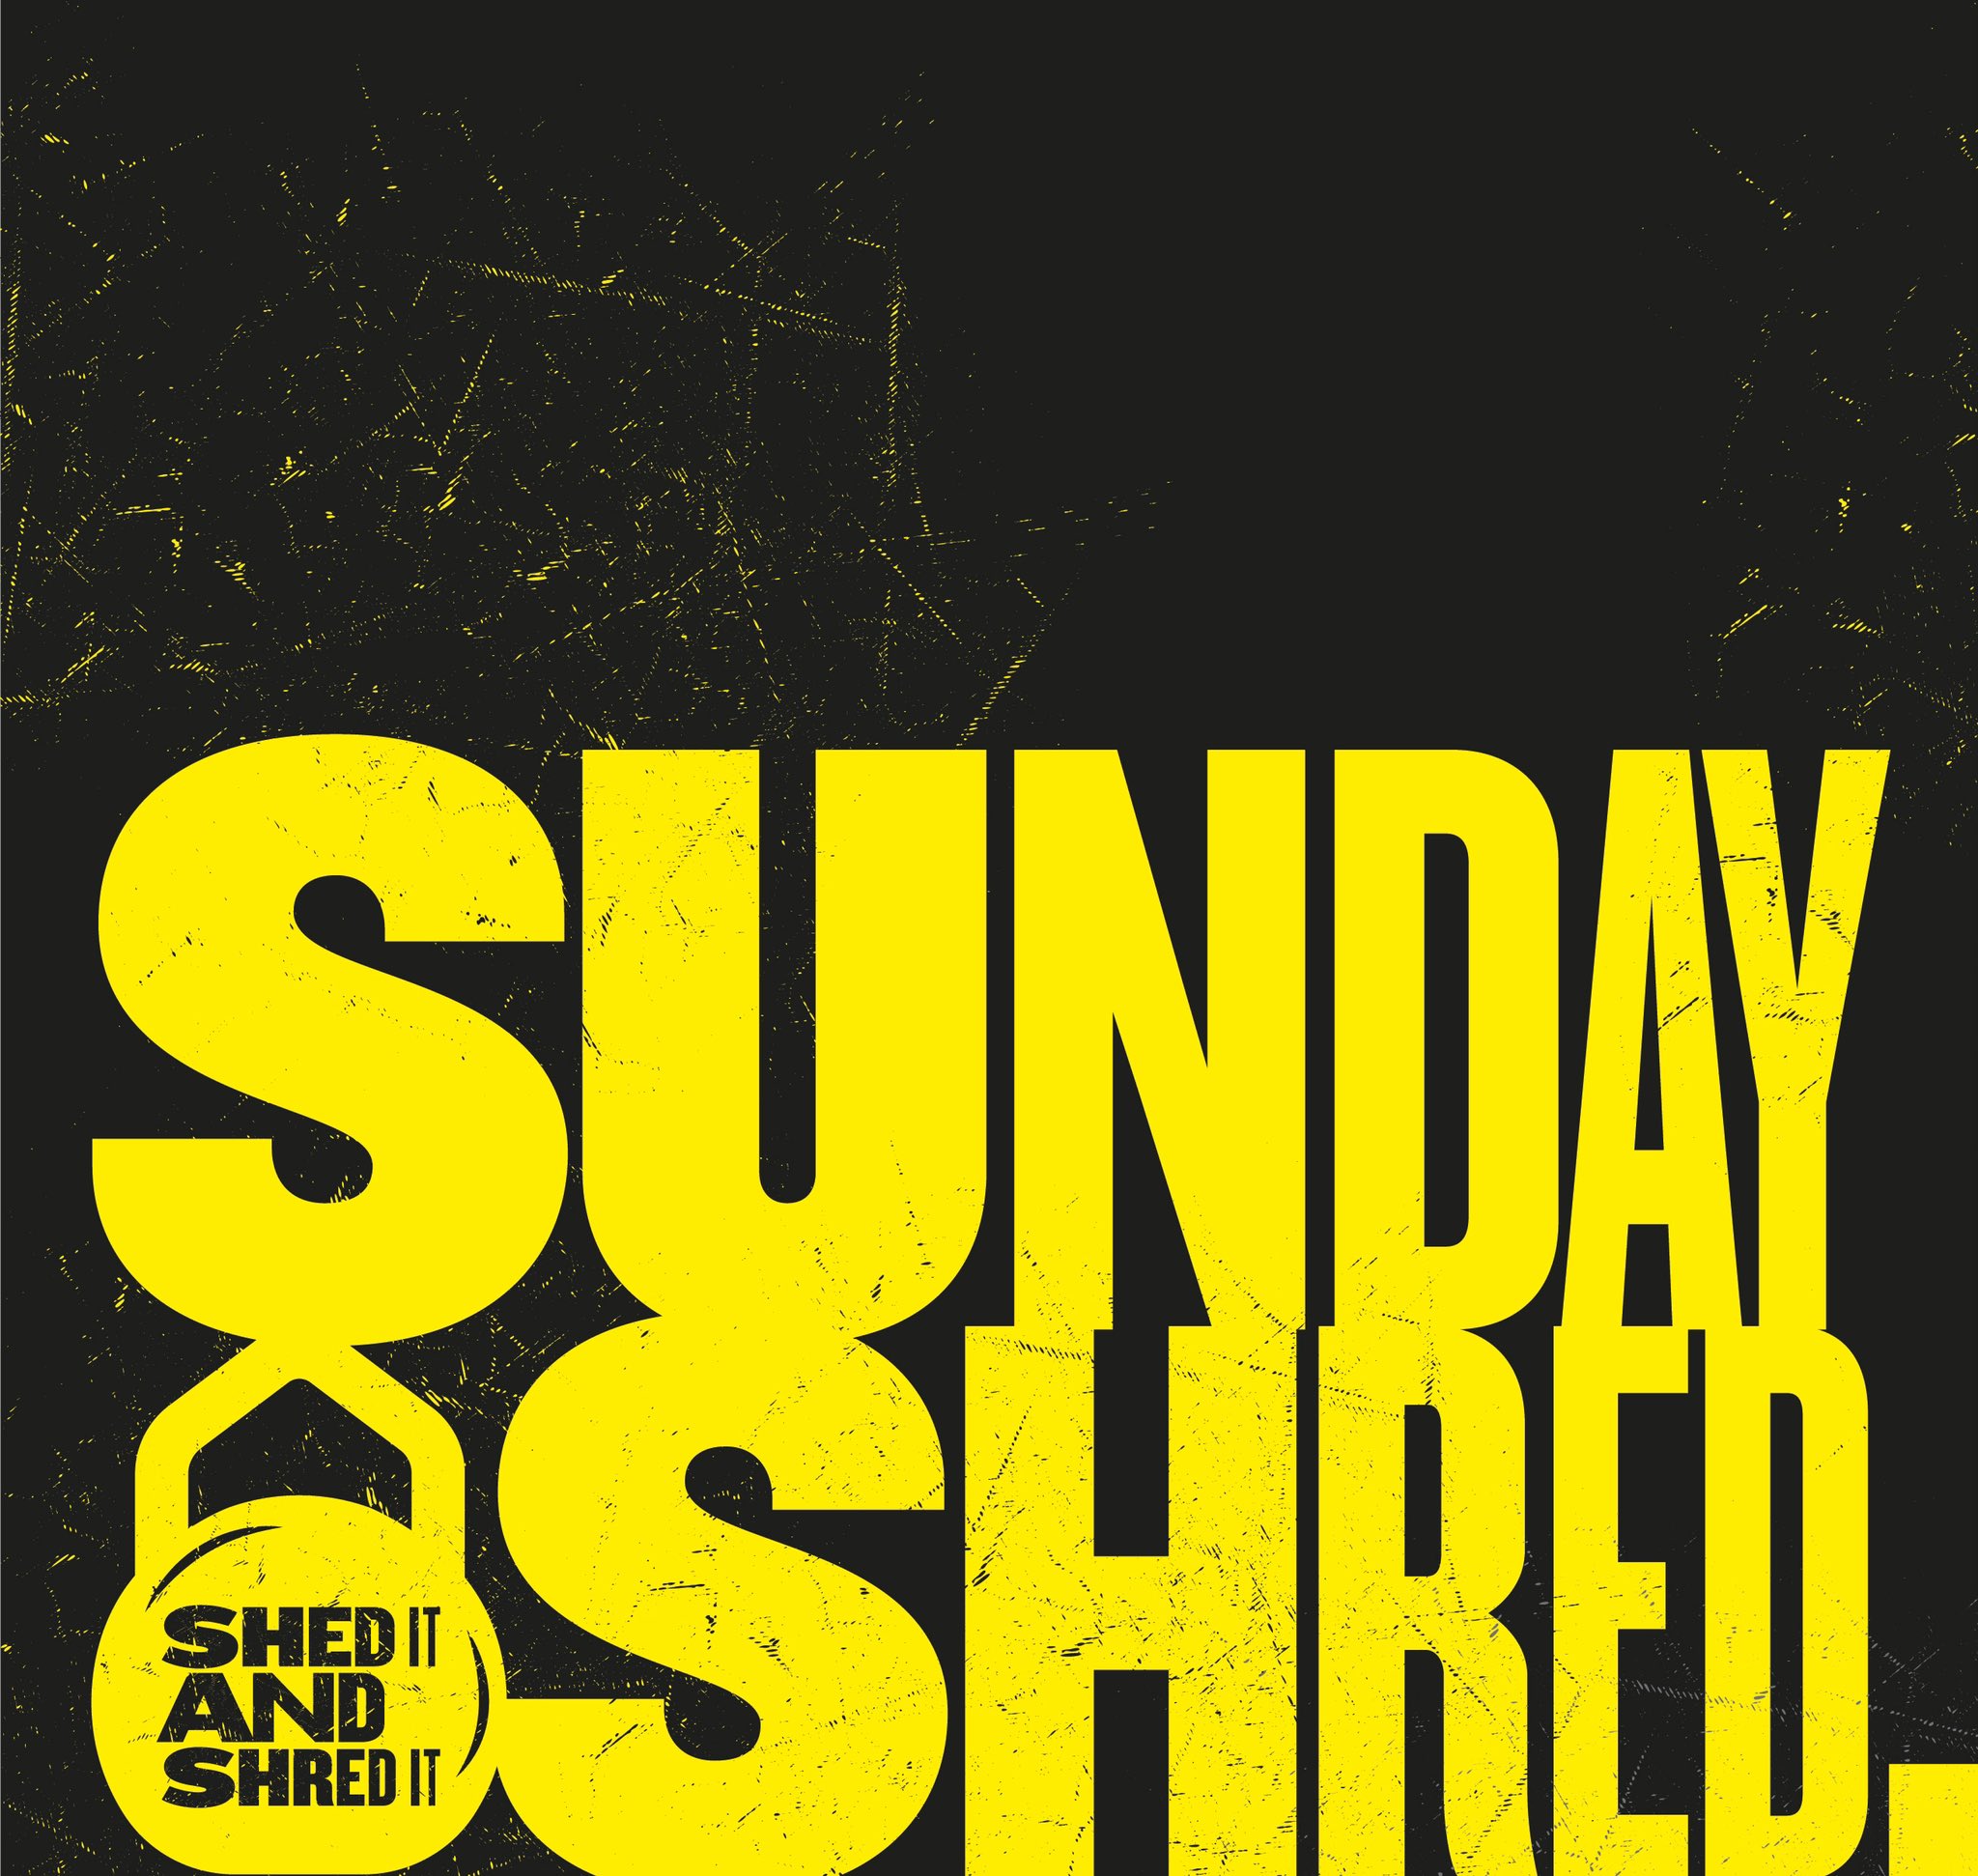 Shred It And Shed It (@shreditshedit) / X